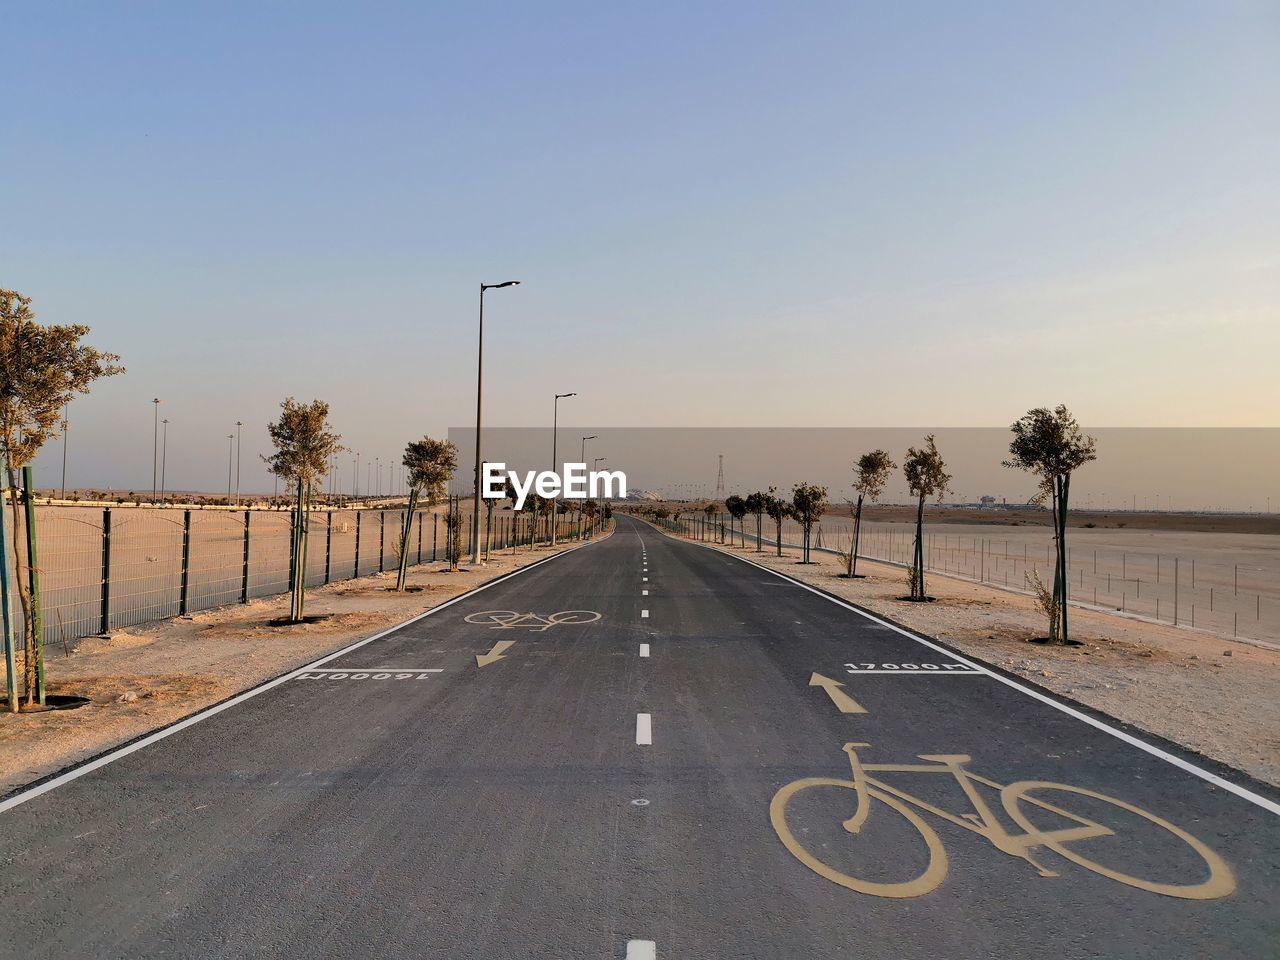 Olympic cycle track, lusail to al khor, qatar